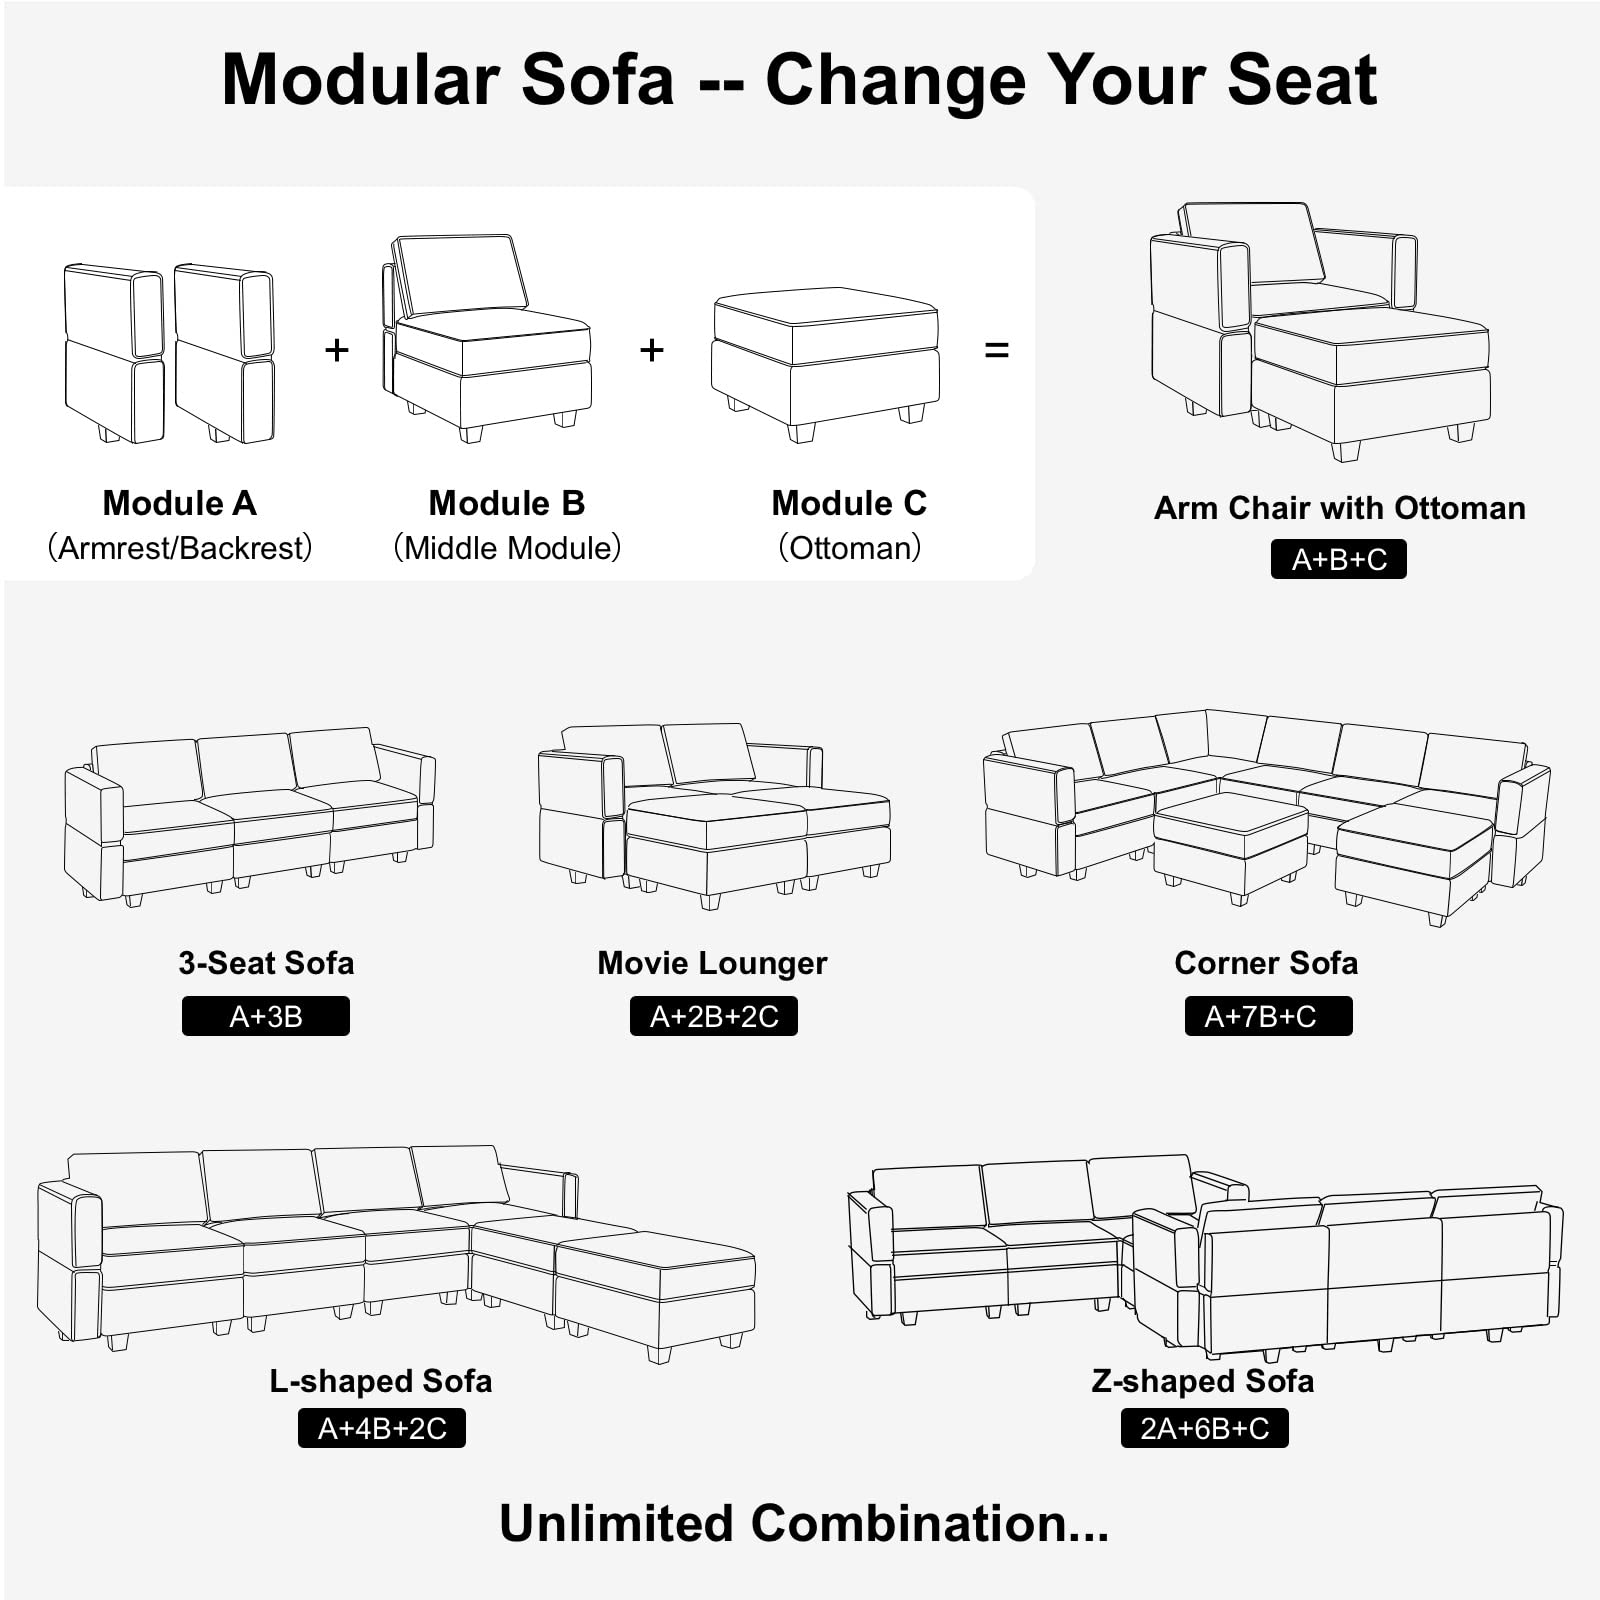 Belffin Storage Ottoman Module for Modular Sectional Sofa Square Seat Cube Velvet Foot Stool Black